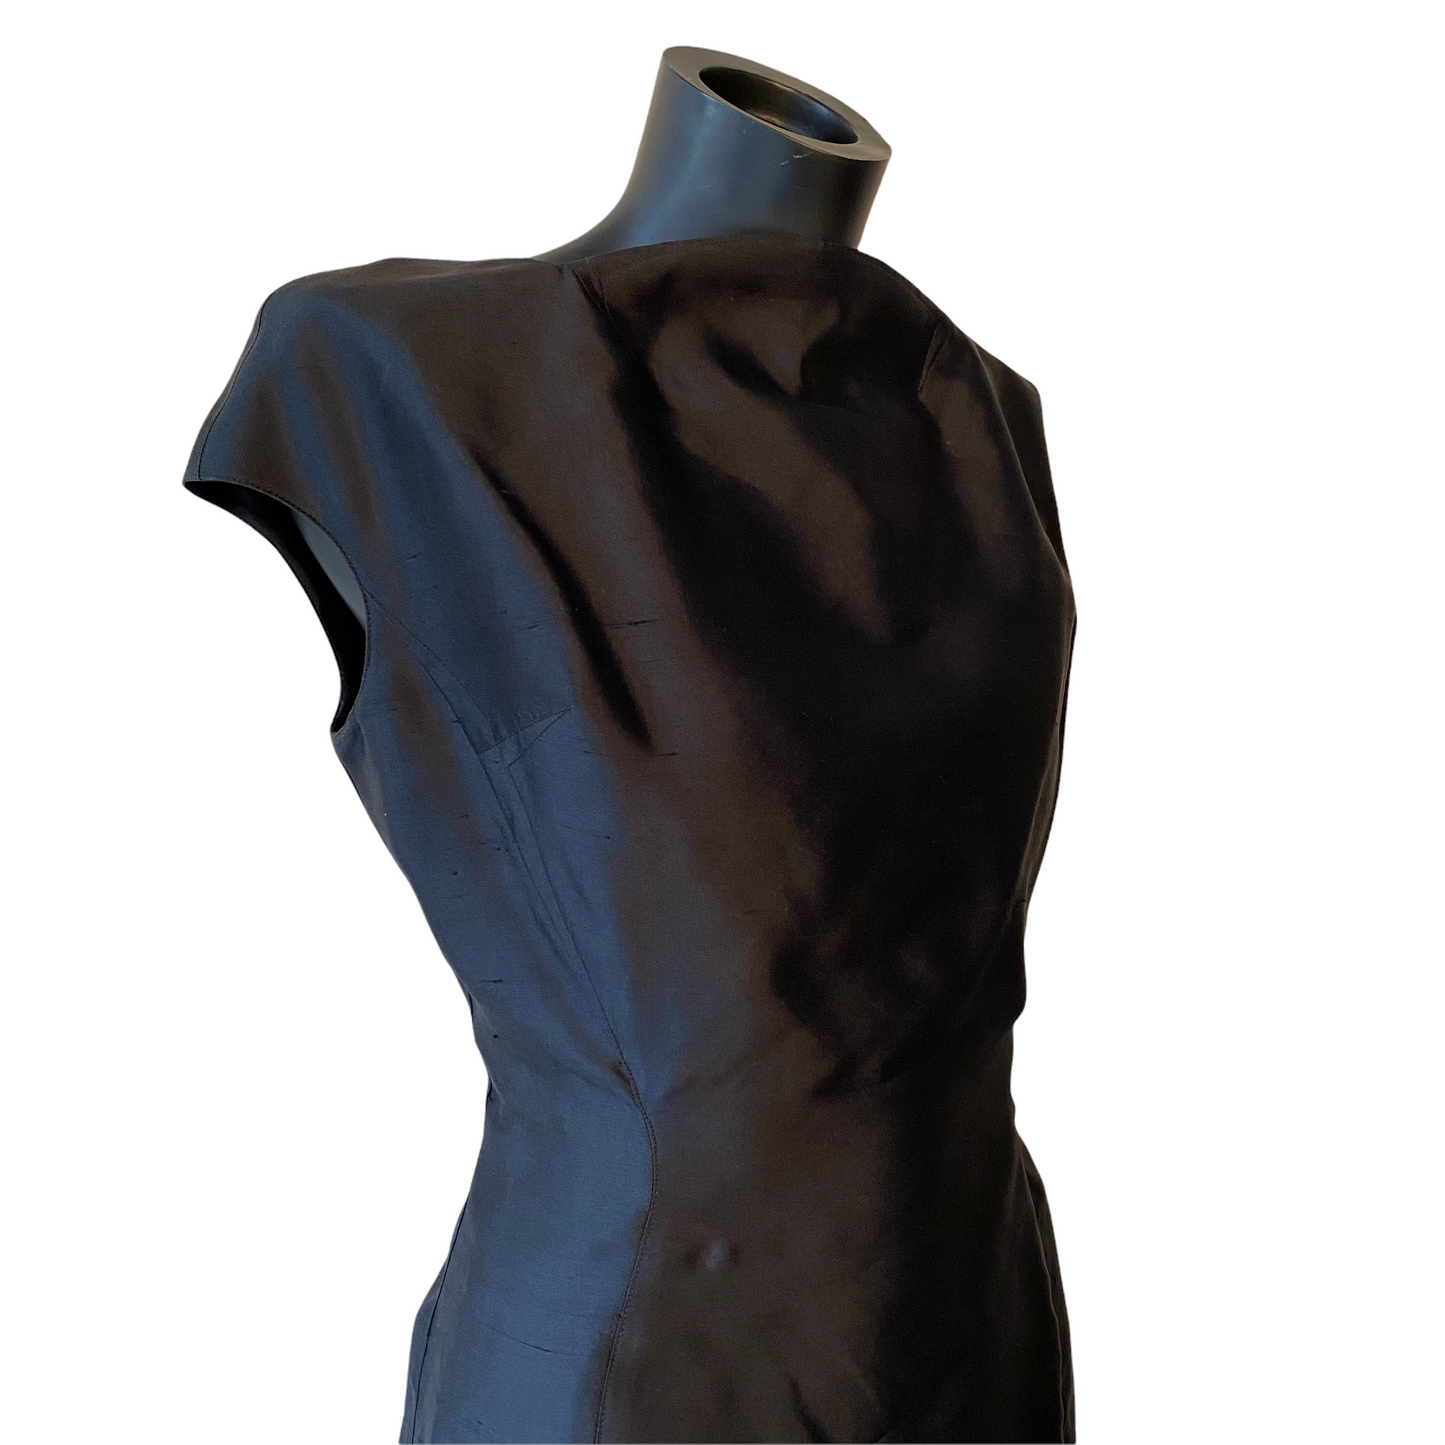 Lysis vintage Thierry Mugler vintage cocktail dress in black silk - XS - 1980s